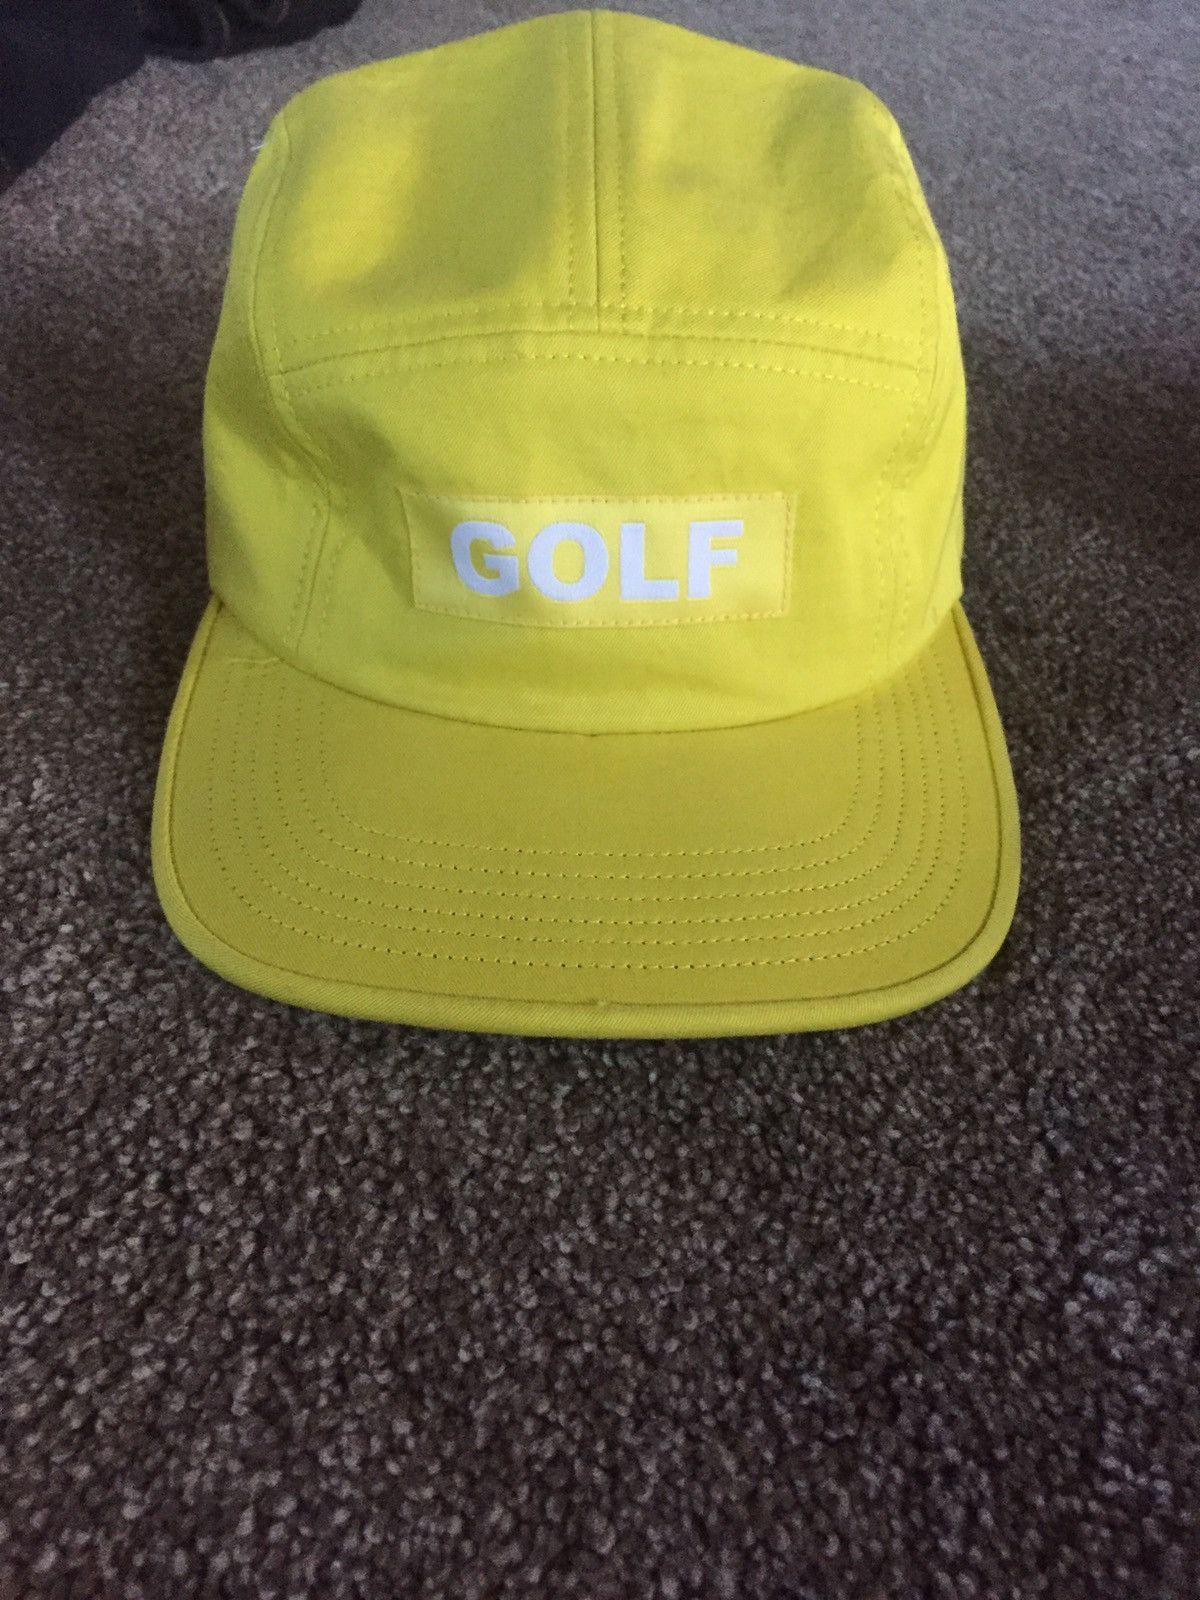 Golf Wang Golf wang hat | Grailed